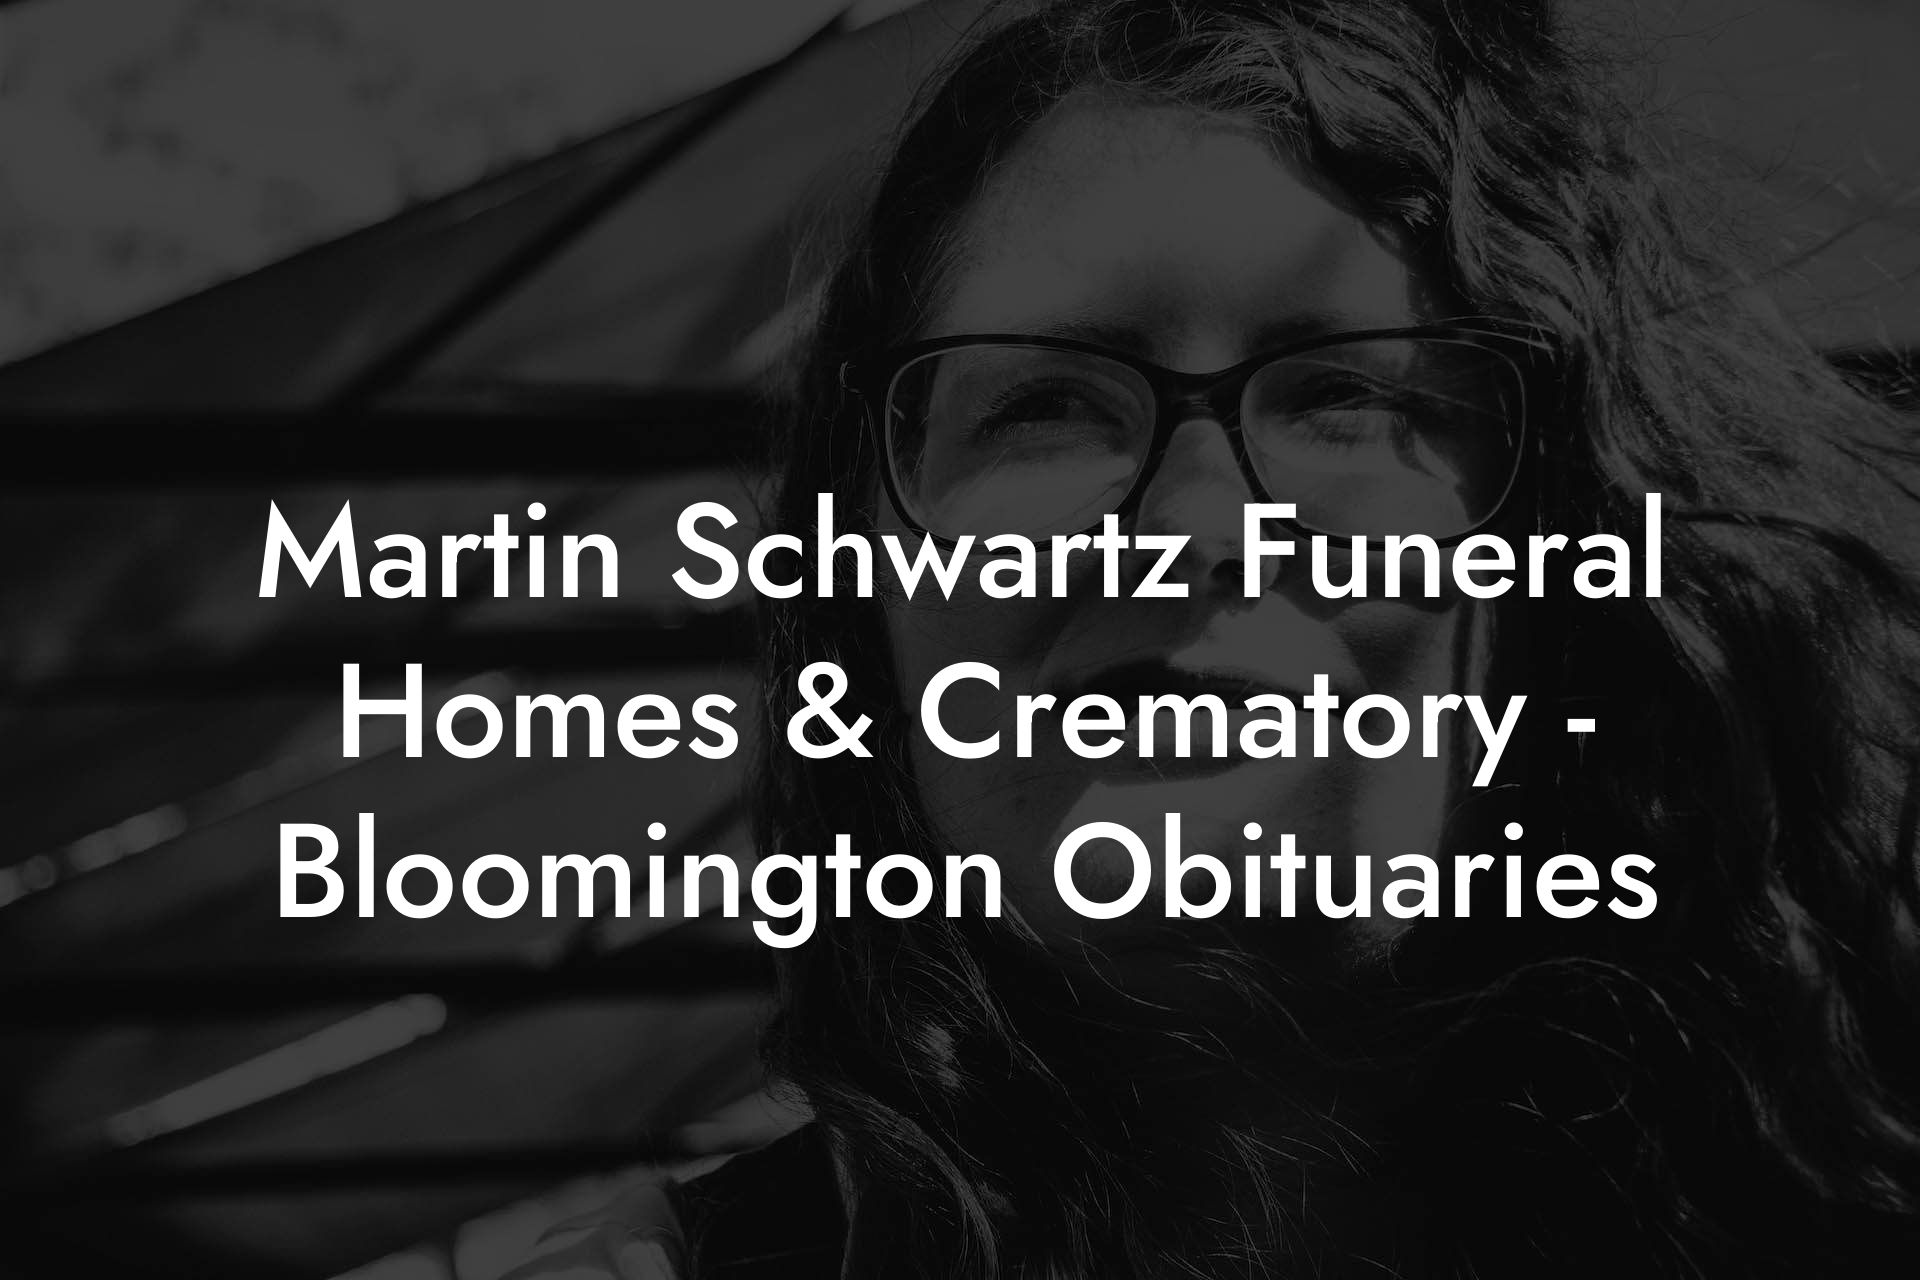 Martin Schwartz Funeral Homes & Crematory - Bloomington Obituaries